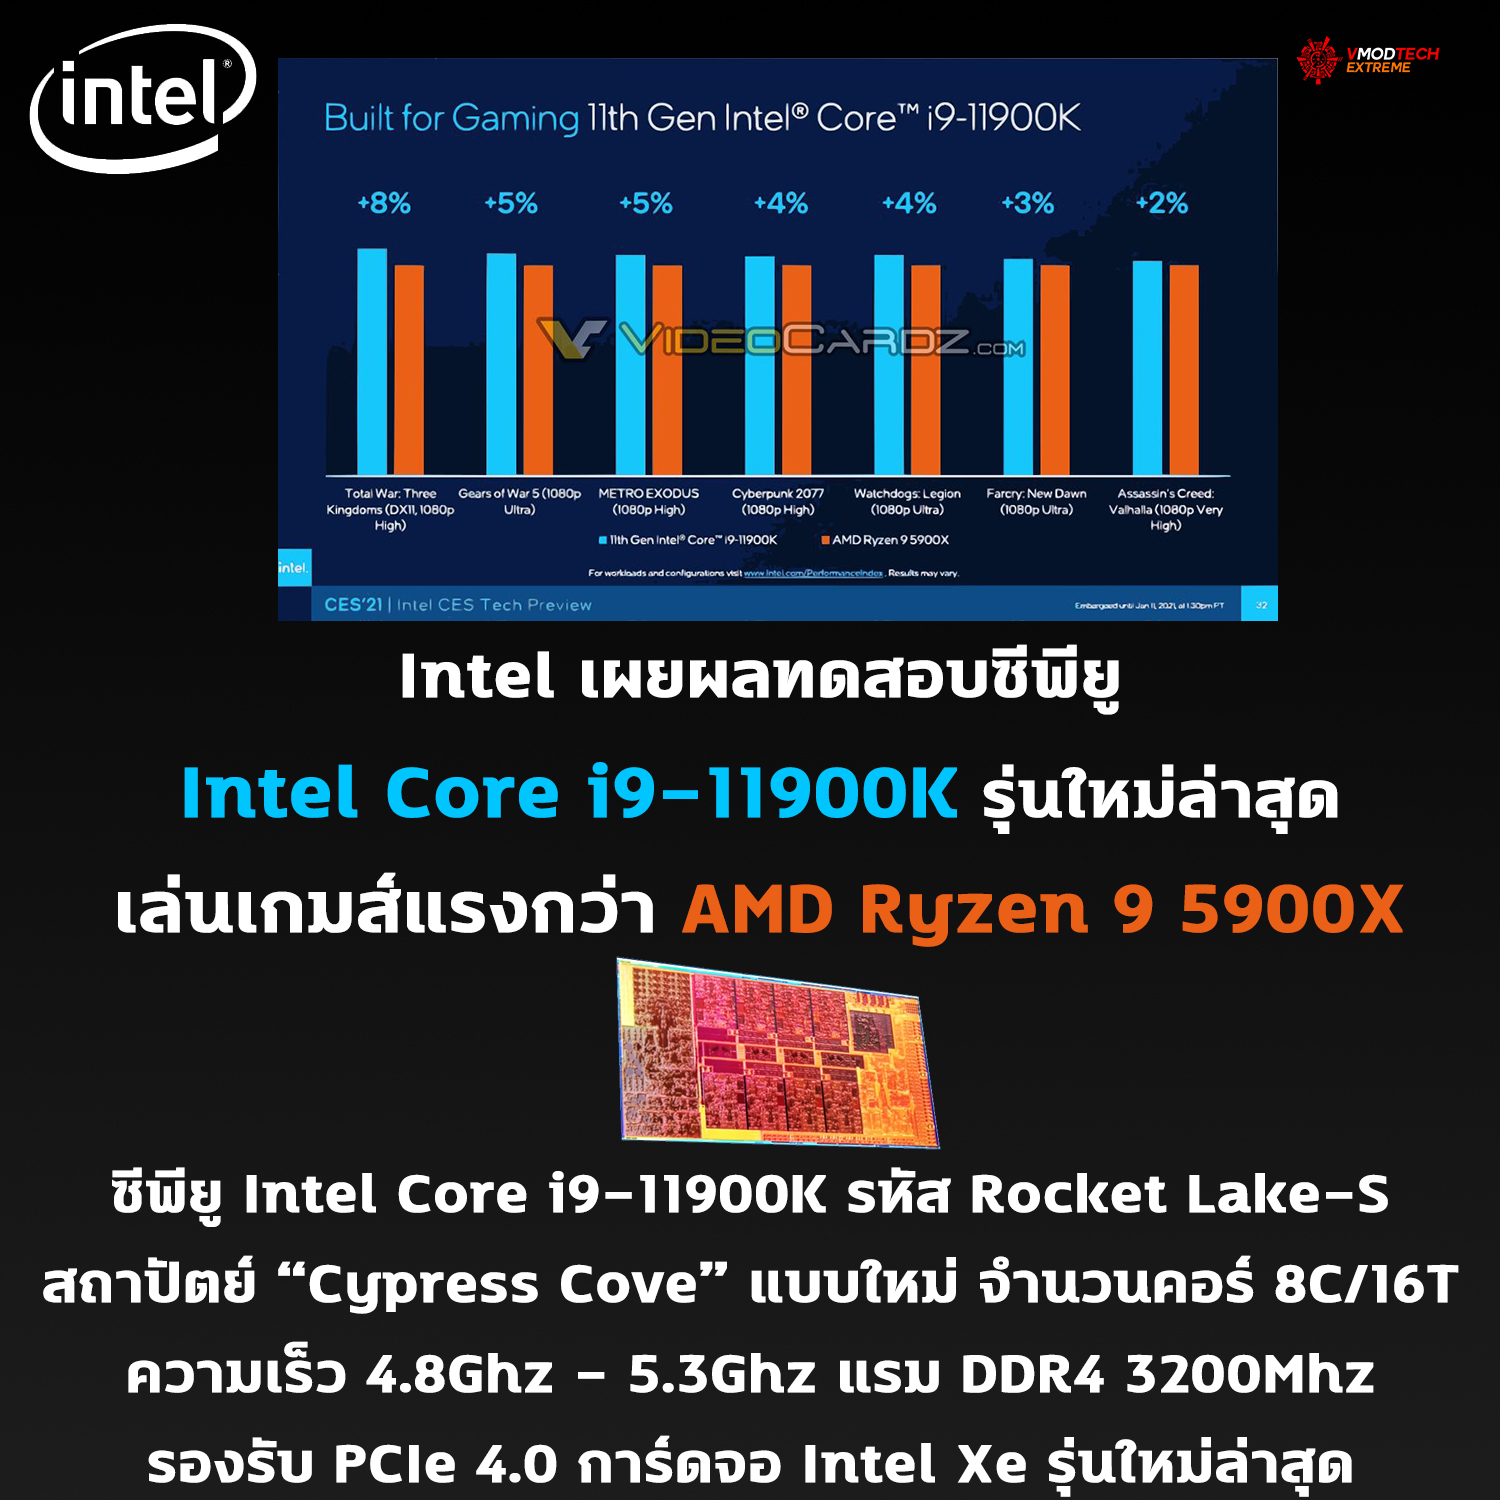 Intel เผยผลทดสอบซีพียู Intel Core i9-11900K รุ่นใหม่ล่าสุดกับประสิทธิภาพในการเล่นเกมส์แรงกว่า AMD Ryzen 9 5900X กันเลยทีเดียว